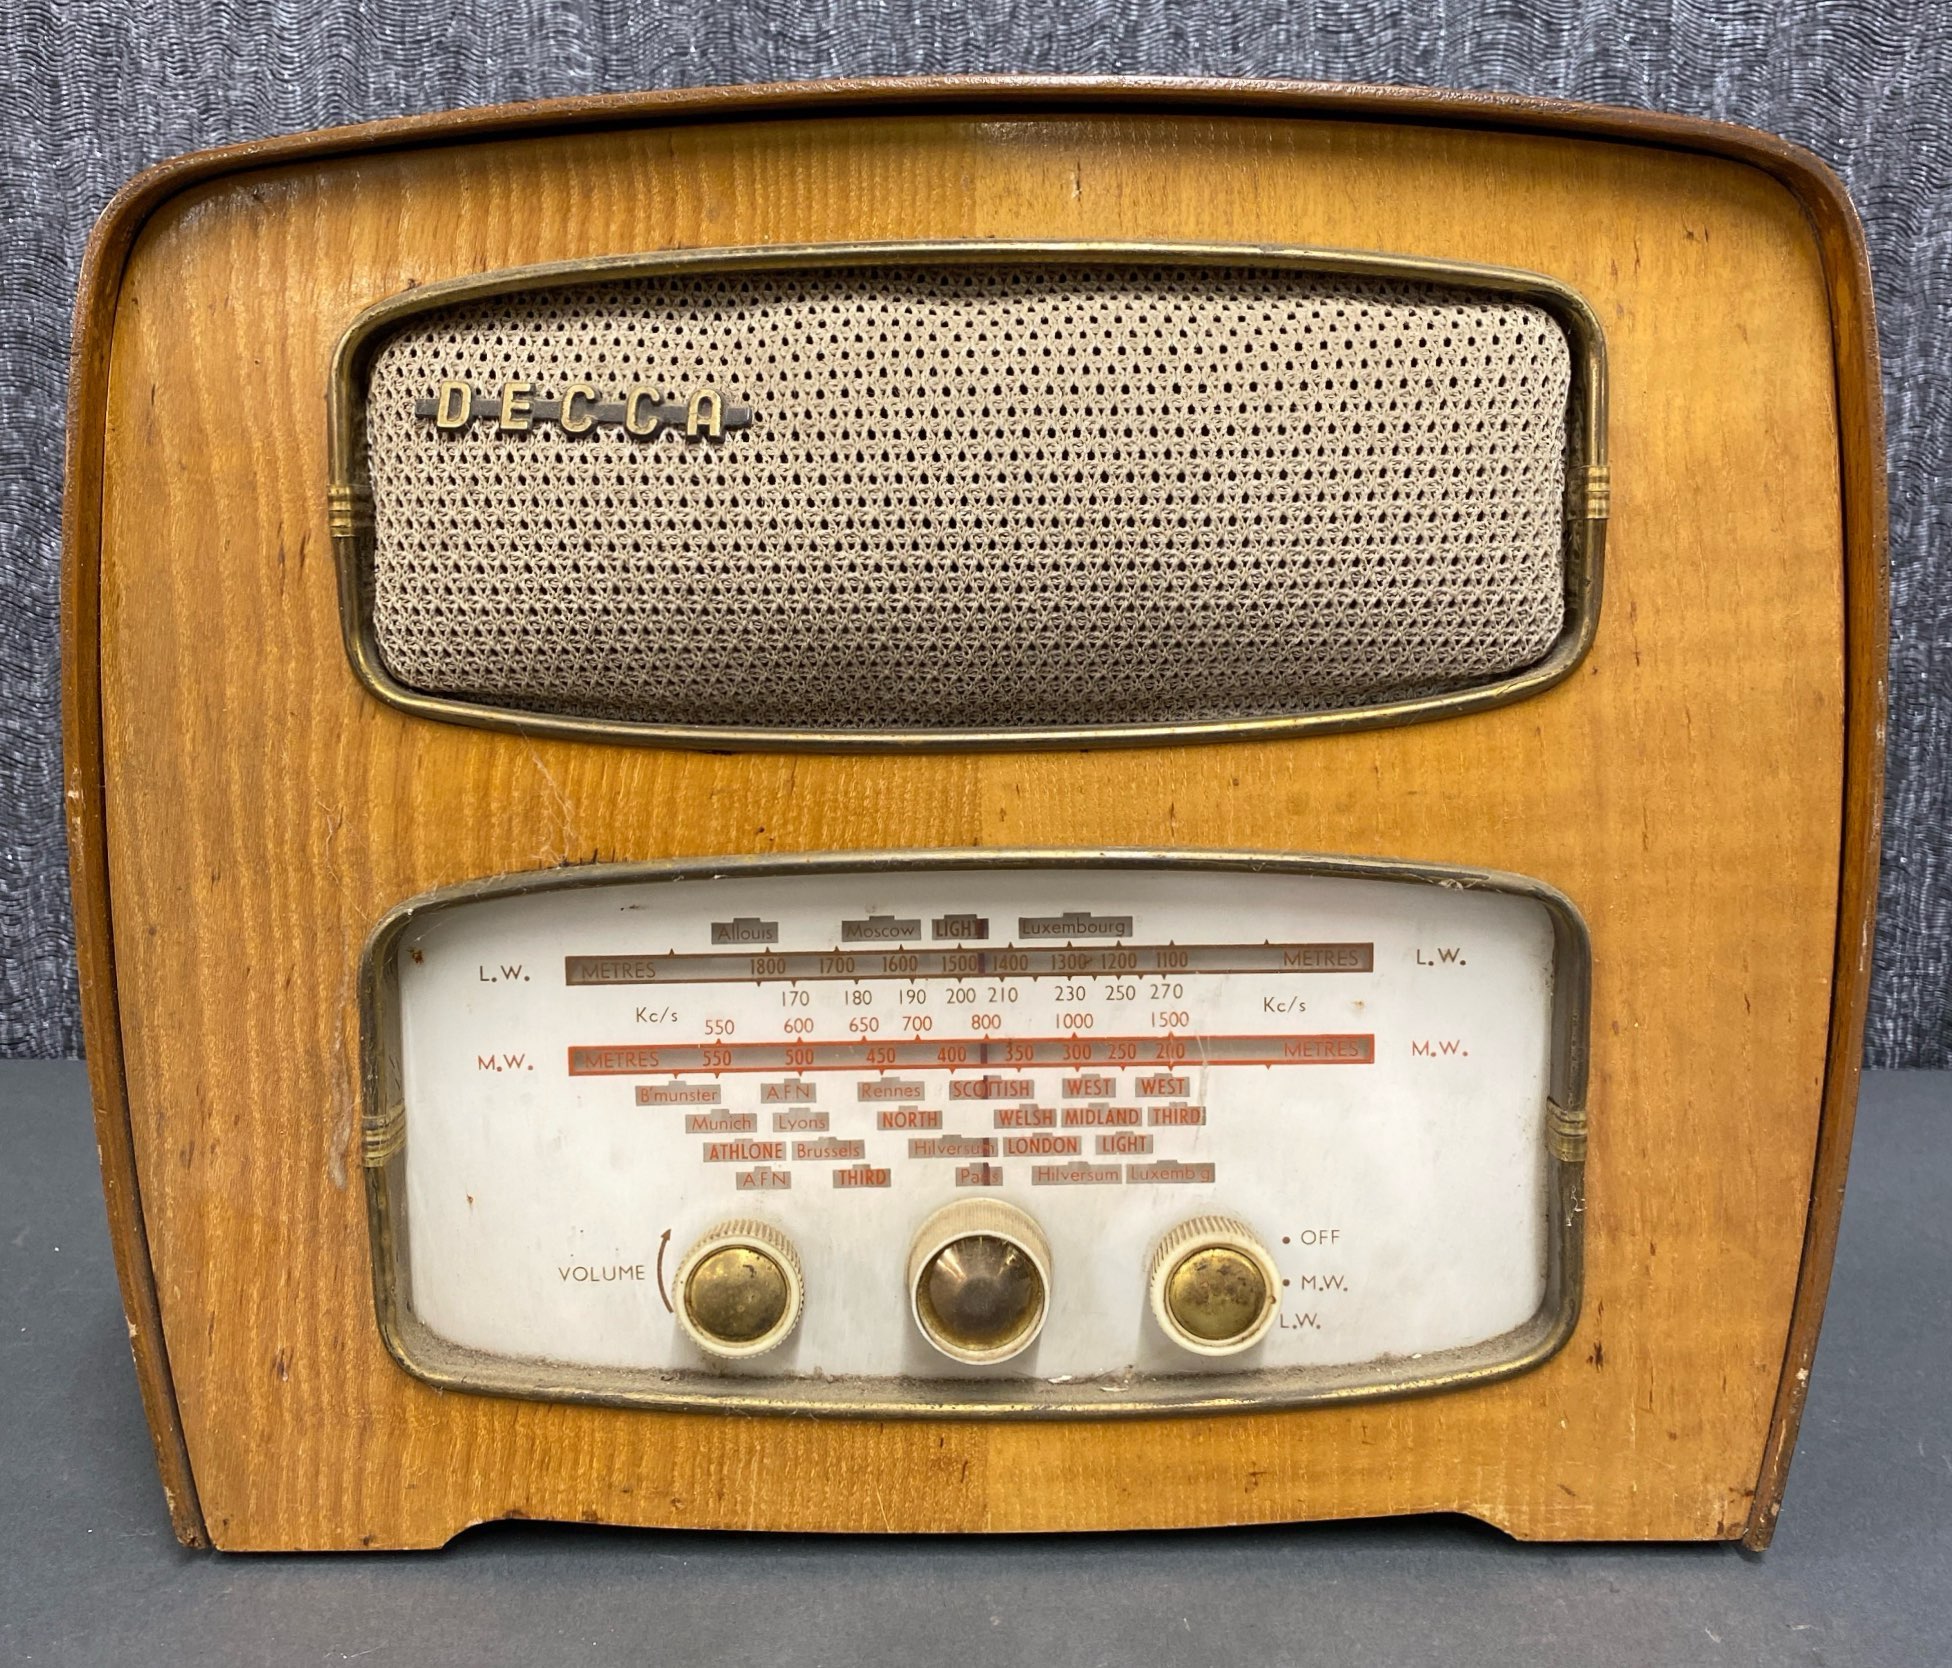 An early Decca radio, model number TT33.